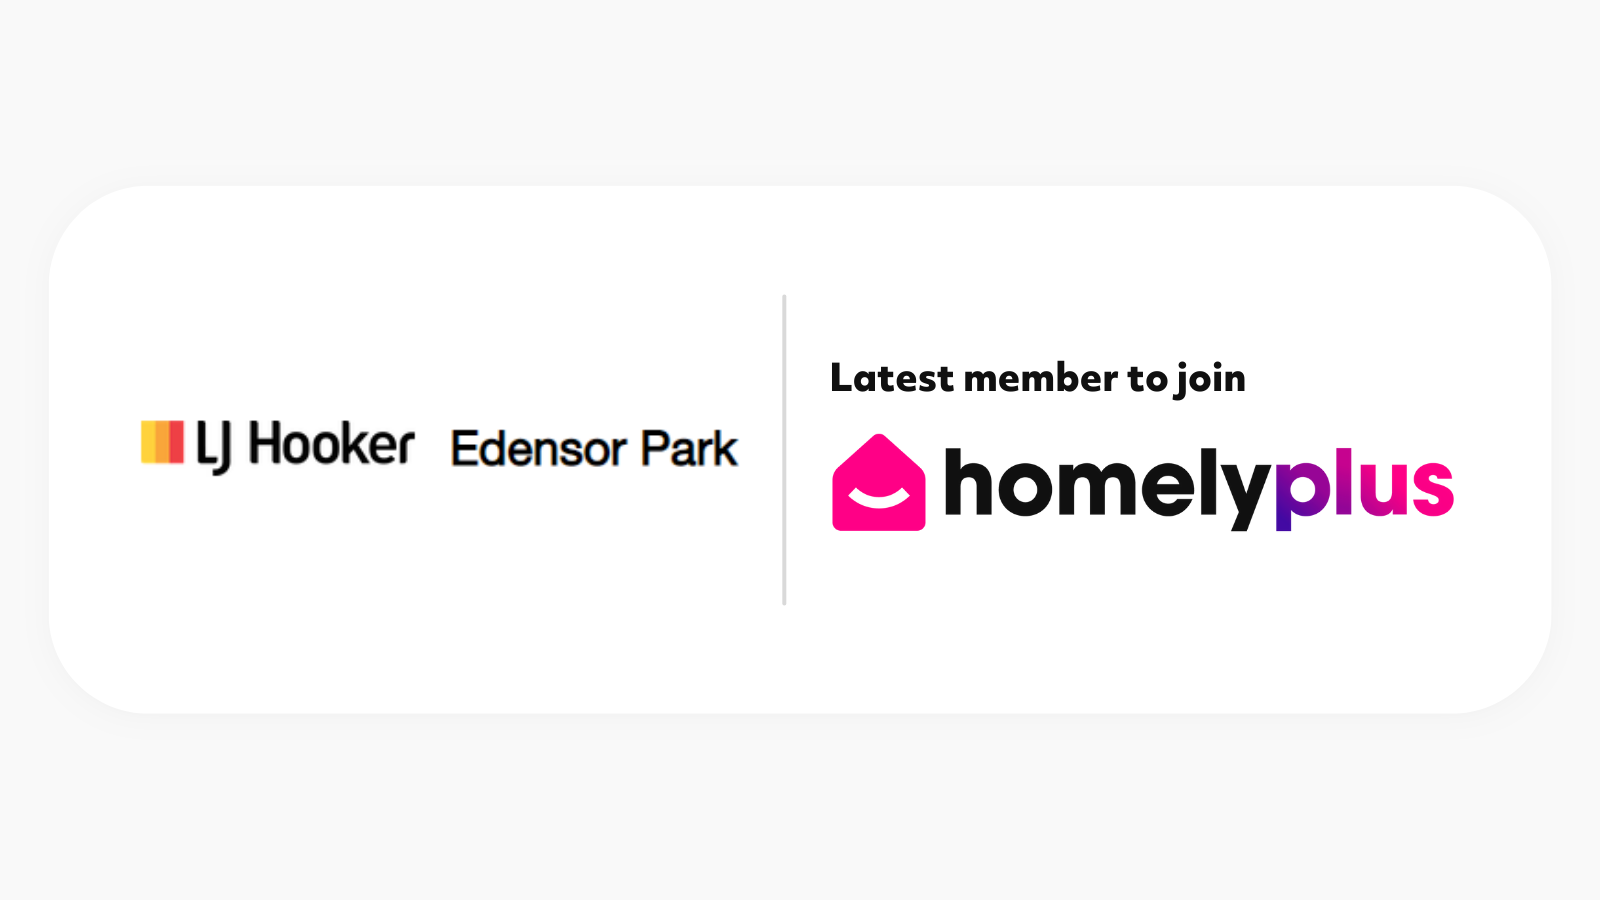 LJ Hooker Edensor Park joins Homely Plus